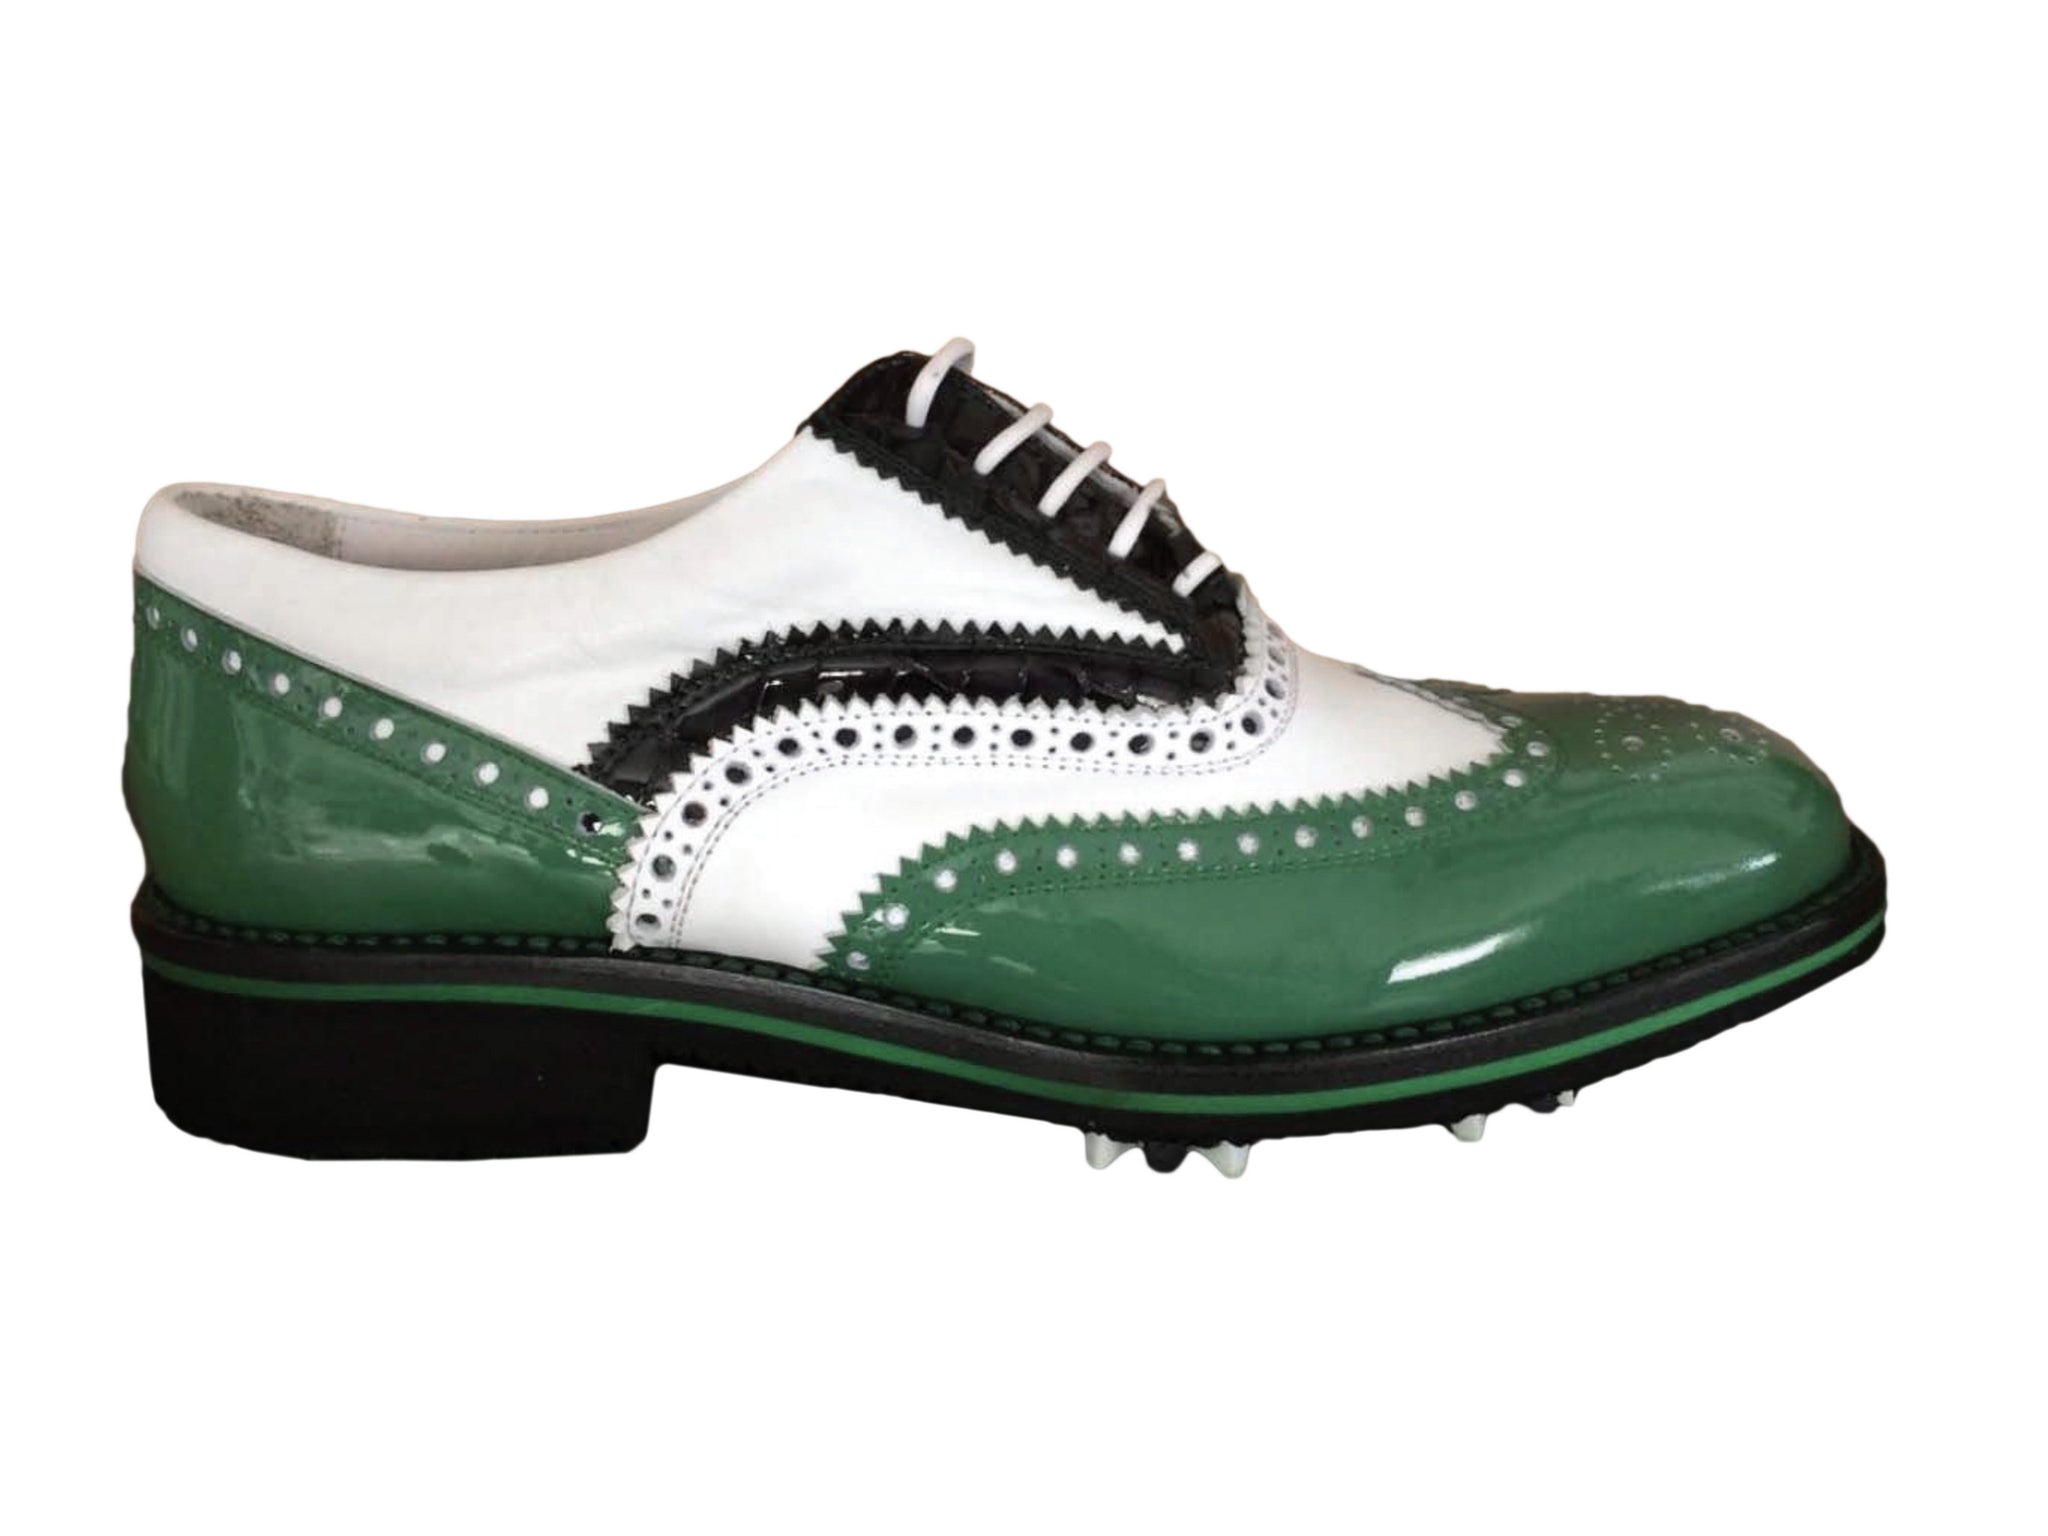 Spiked Golf Shoes - Fresco Golf